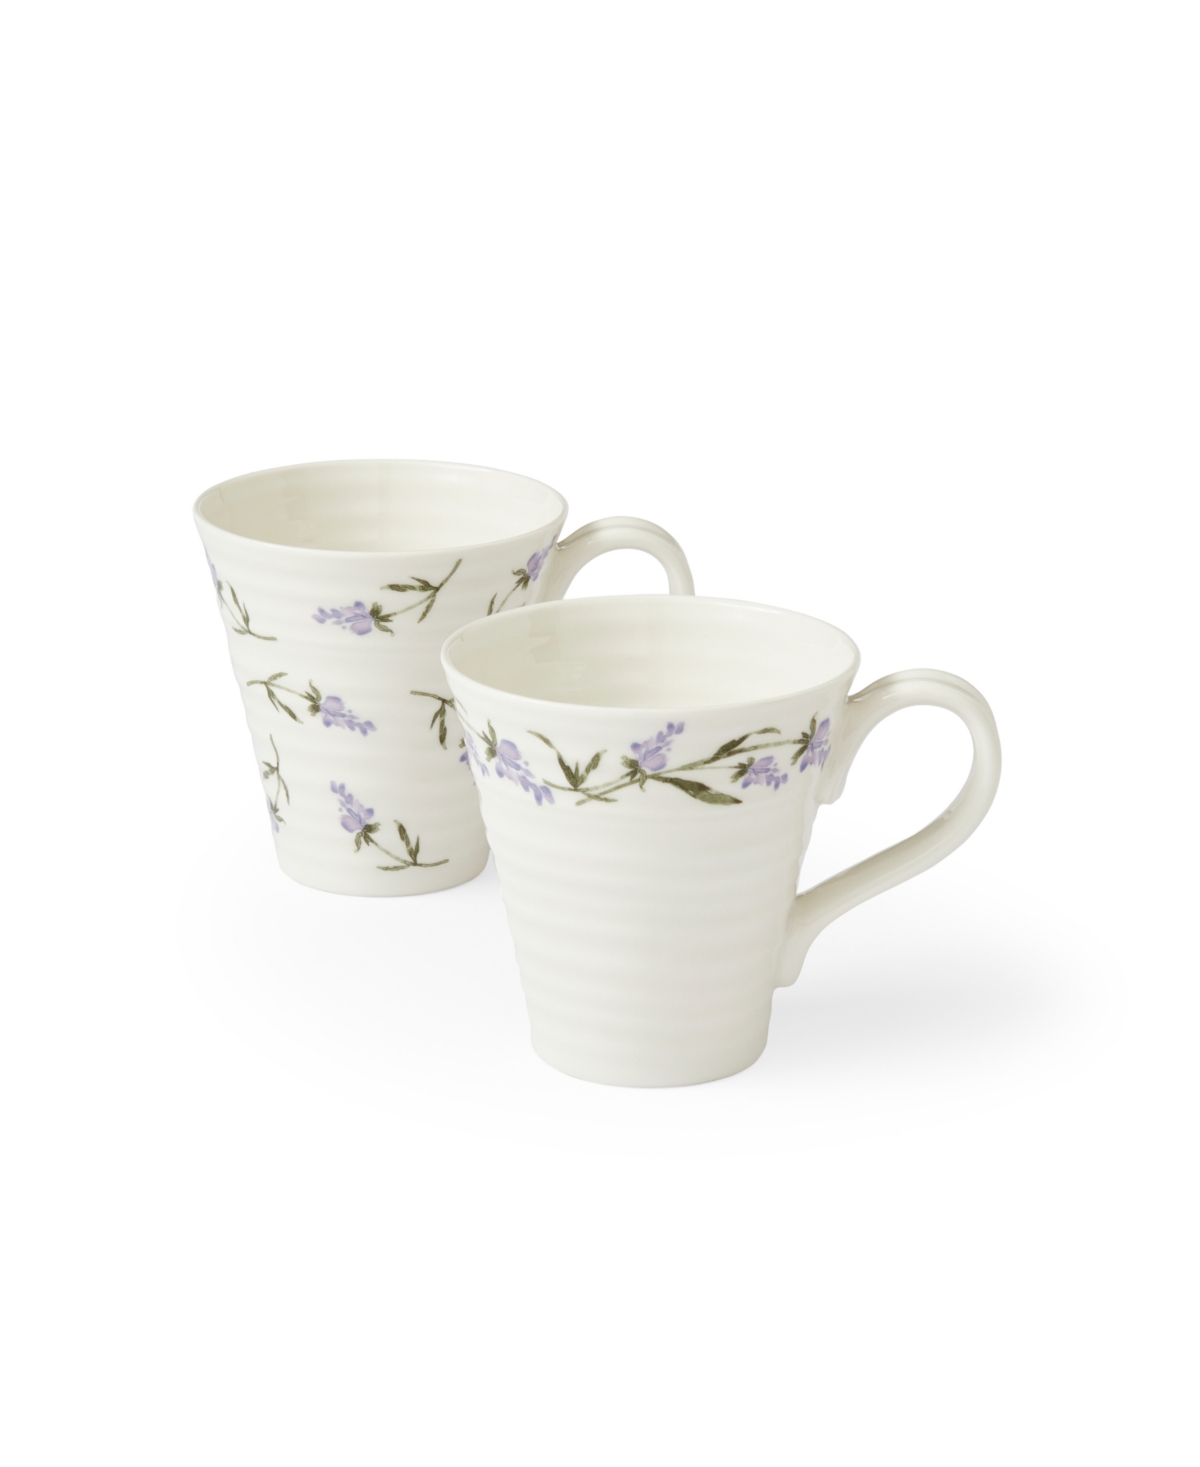 Sophie Conran Lavandula Mugs, Set of 2 - White